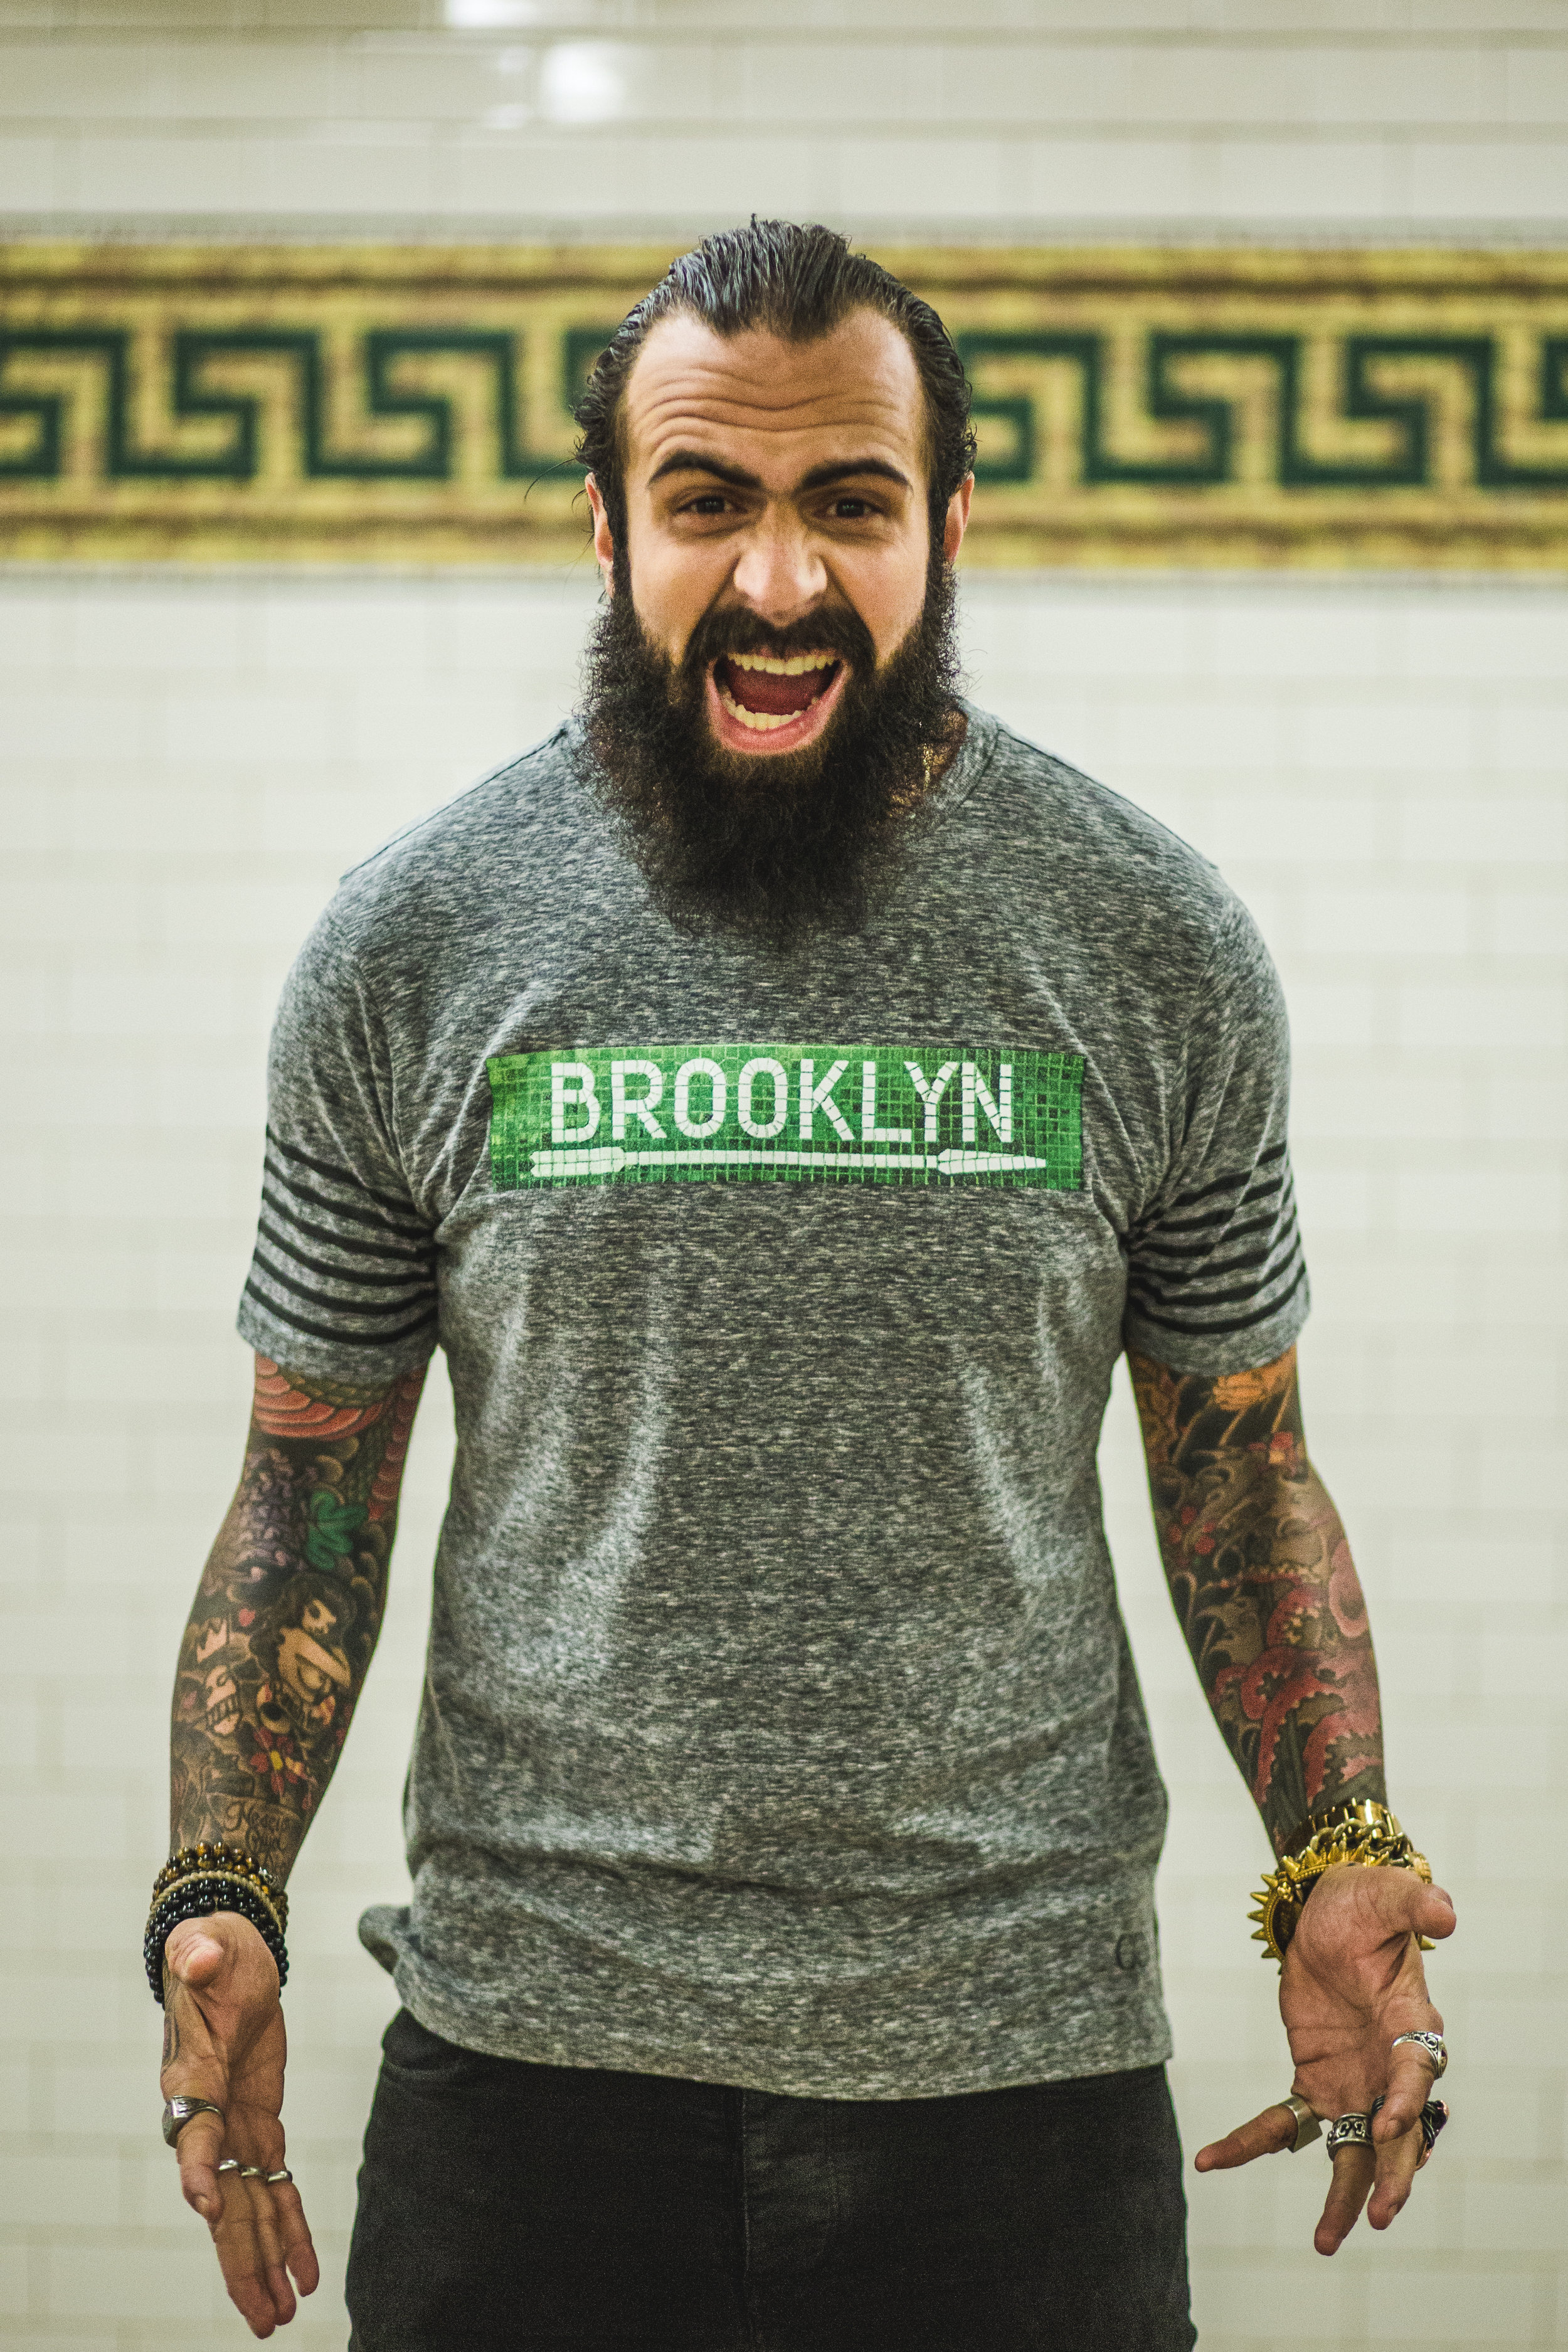 Grungy Gentleman x Subway Tile Shirts 8.jpg